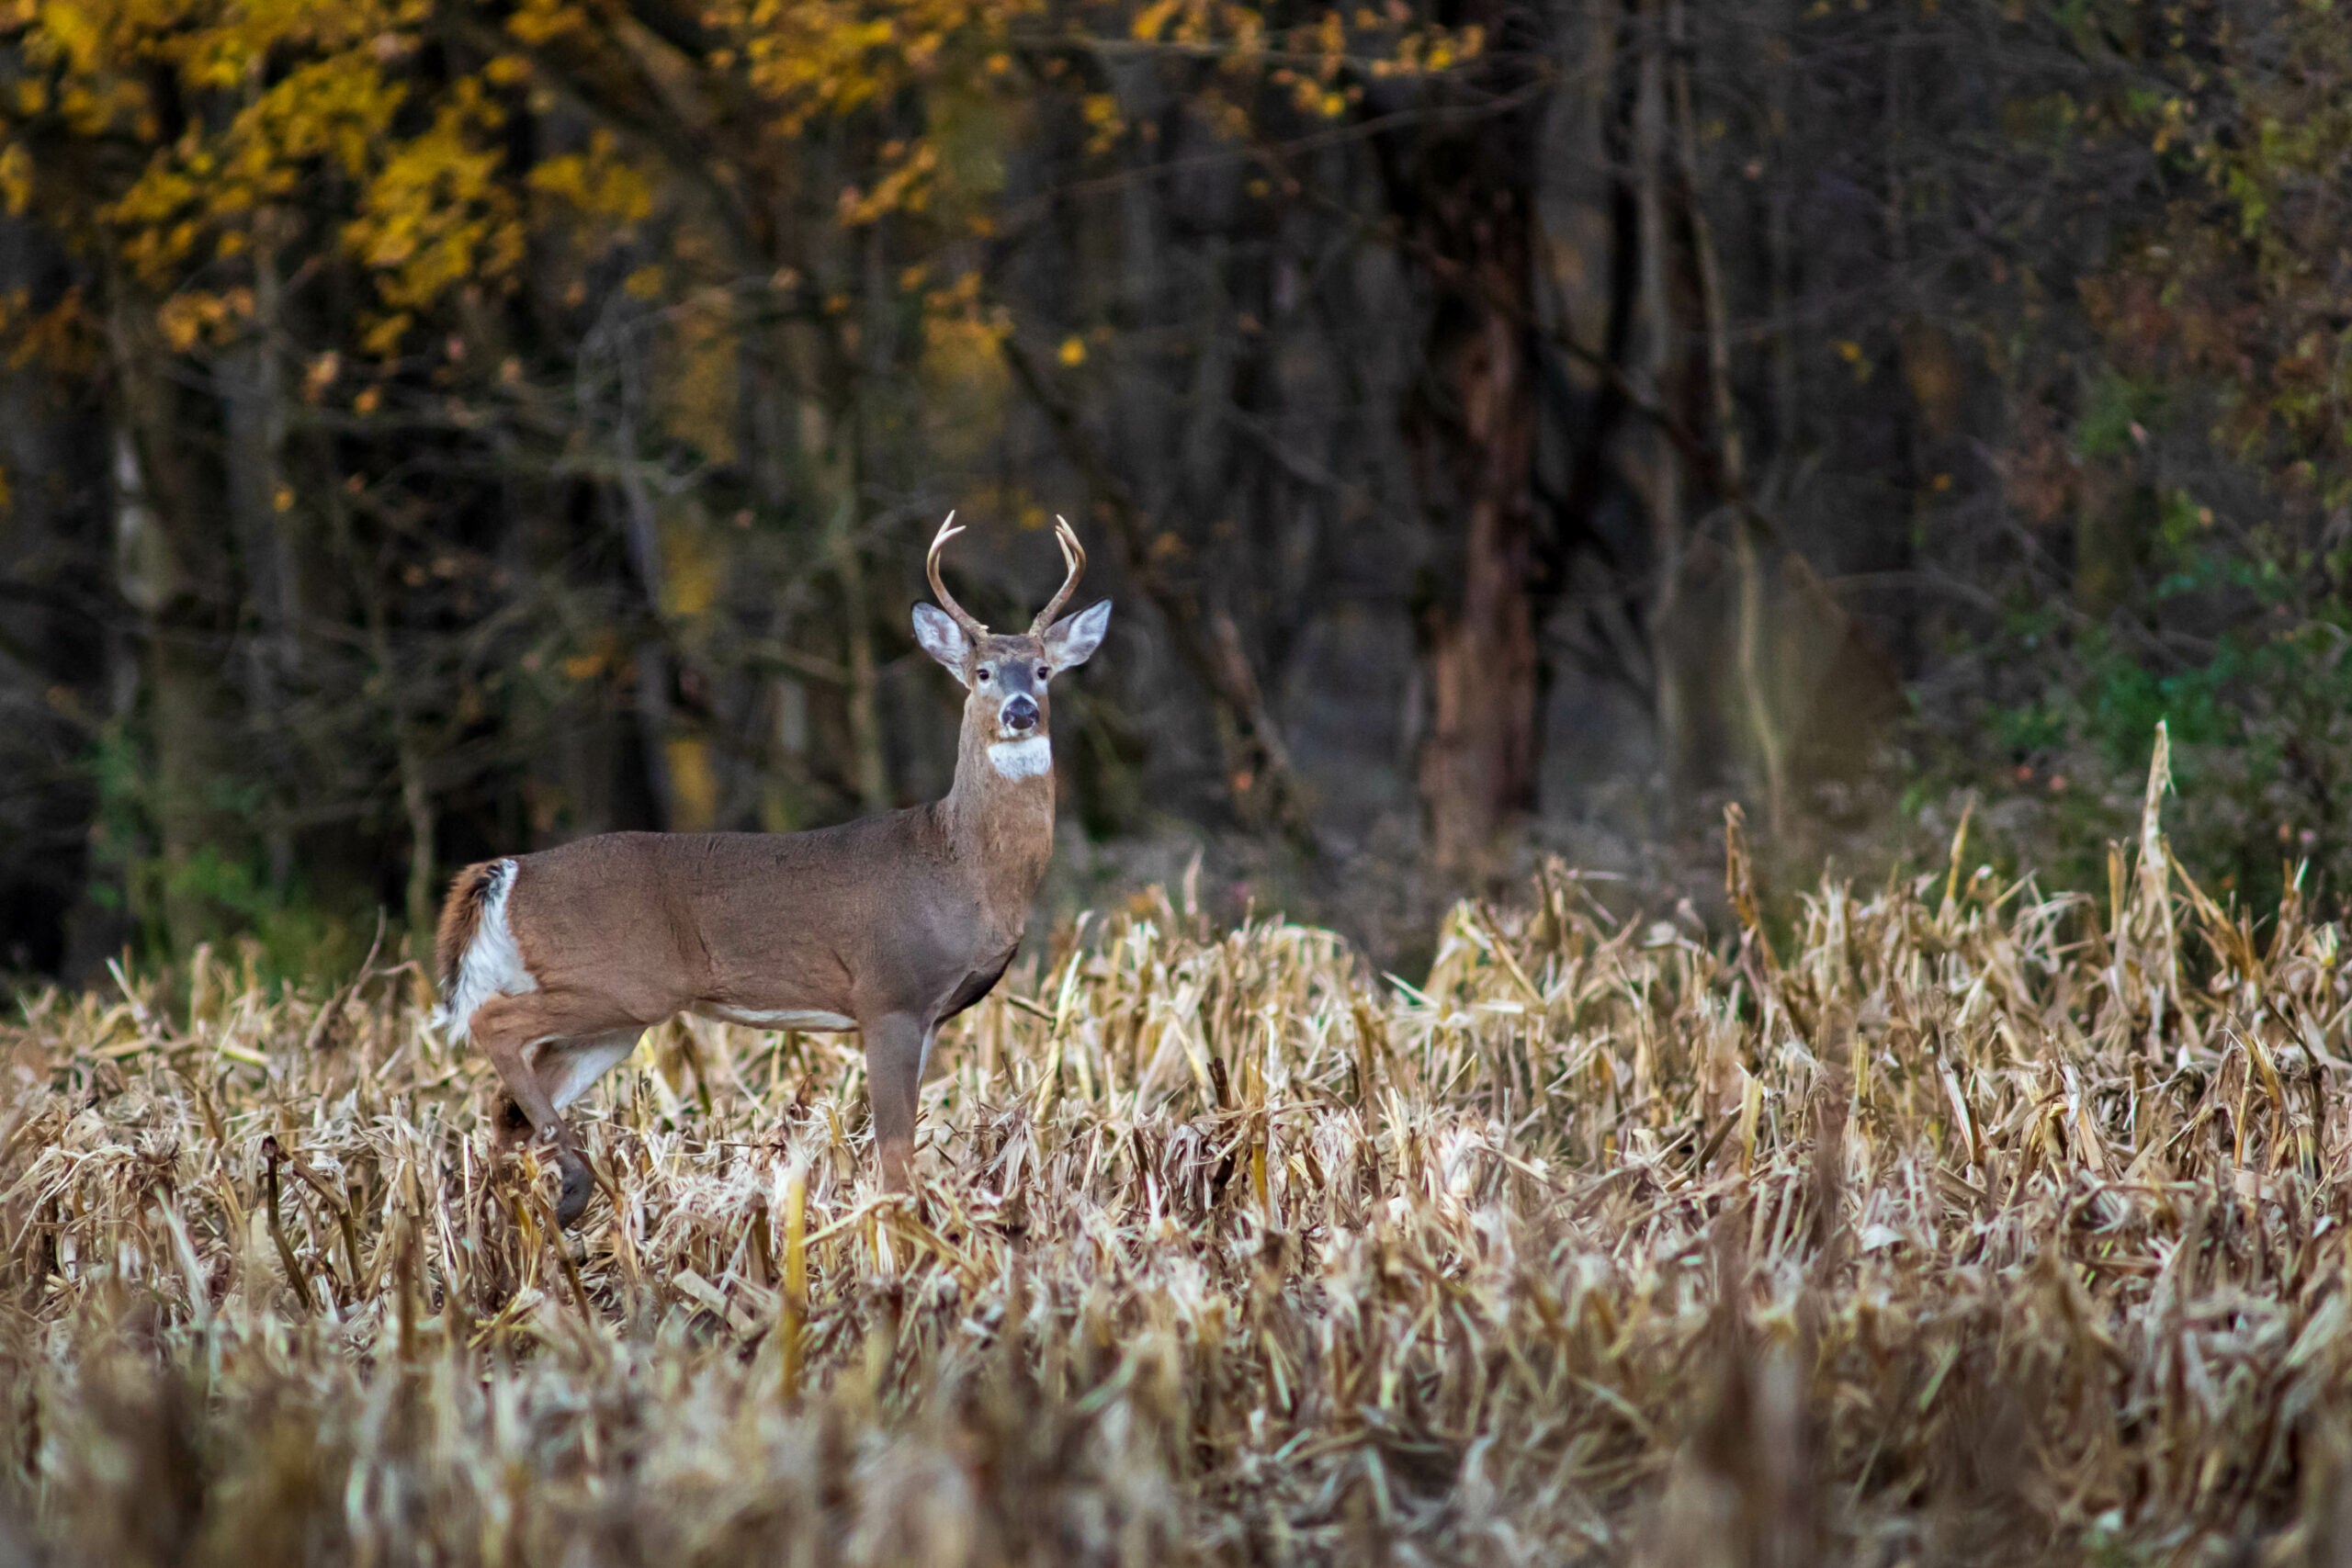 deer eating corn in a fall field